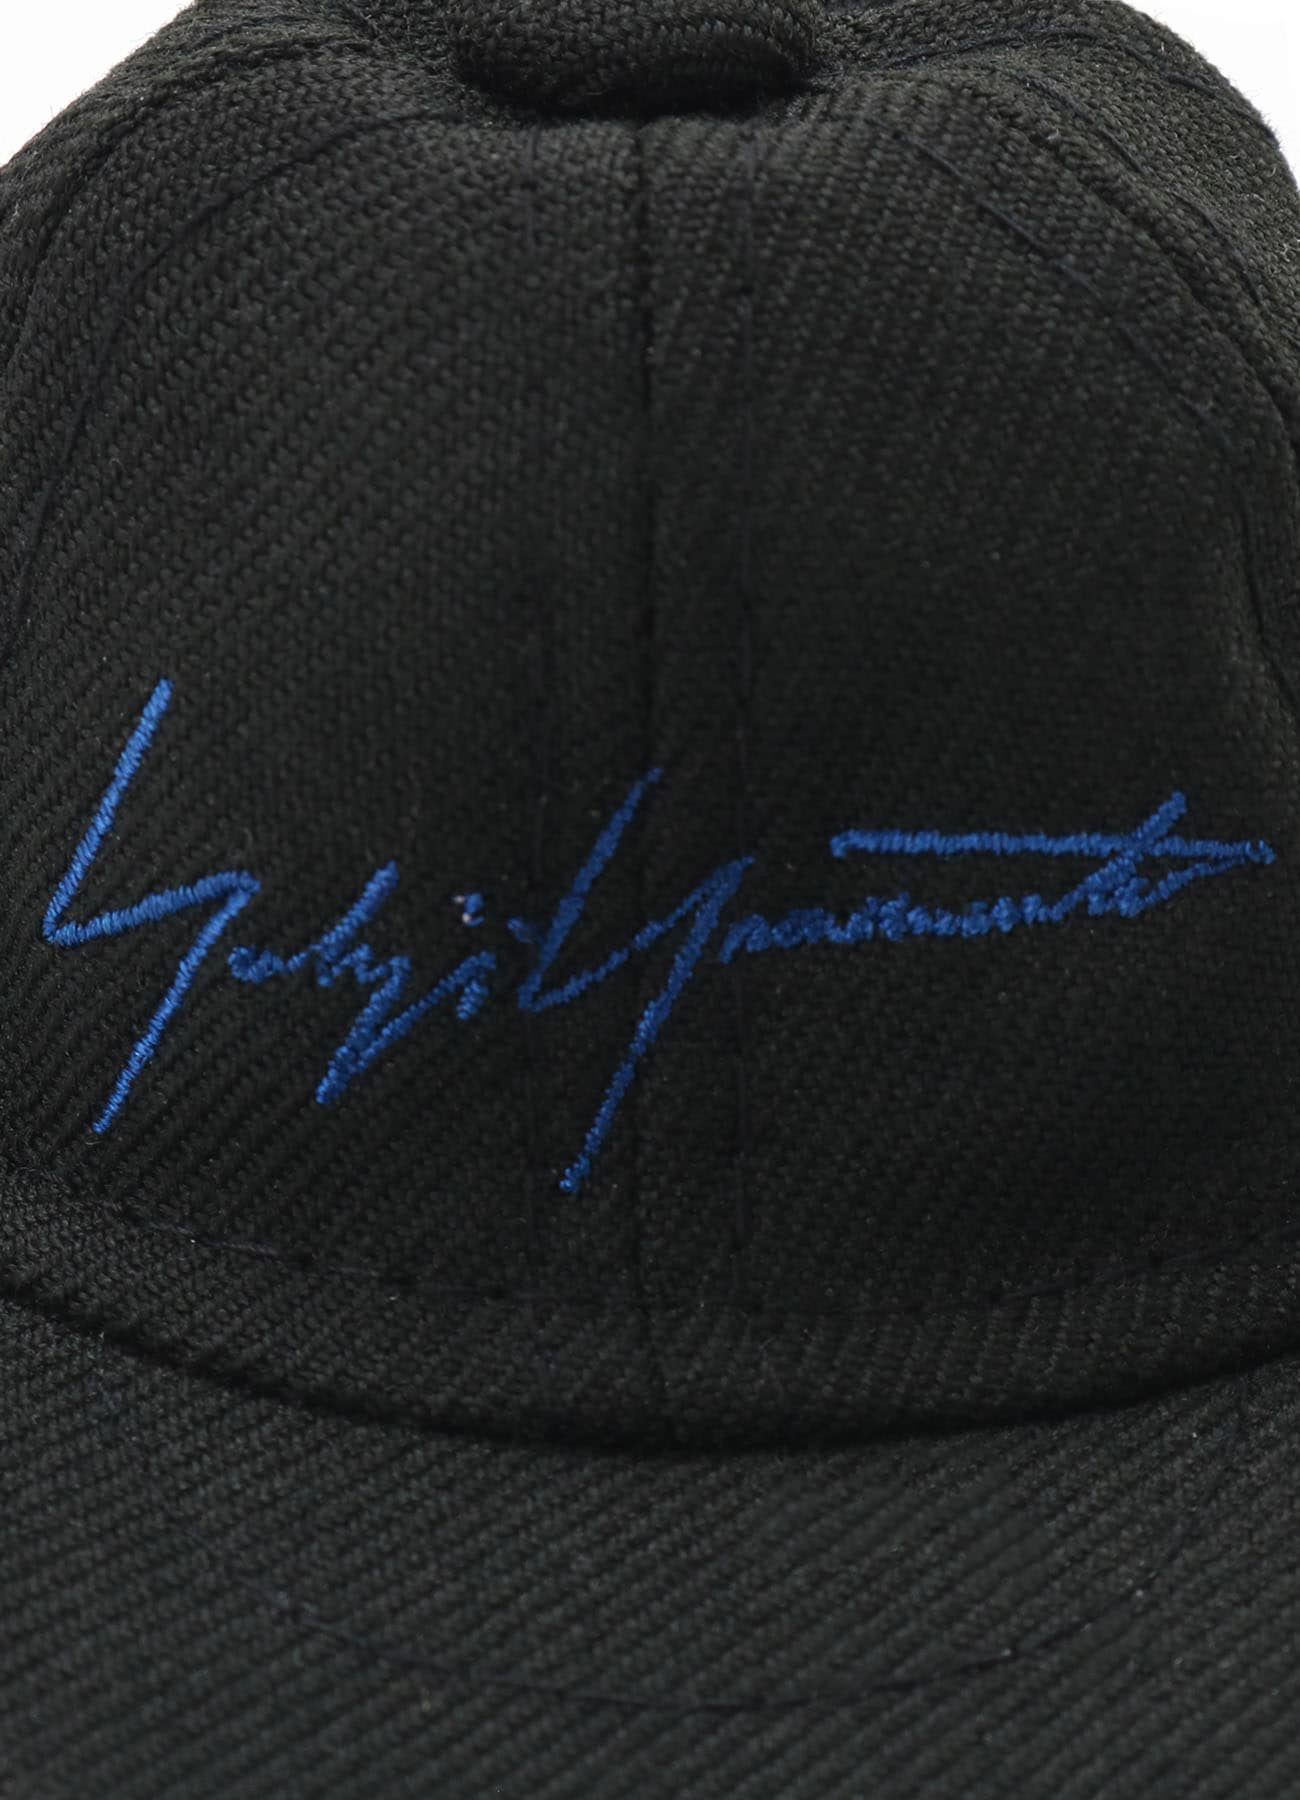 Yohji Yamamoto × New Era SIGNATURE CAP KEY HOLDER